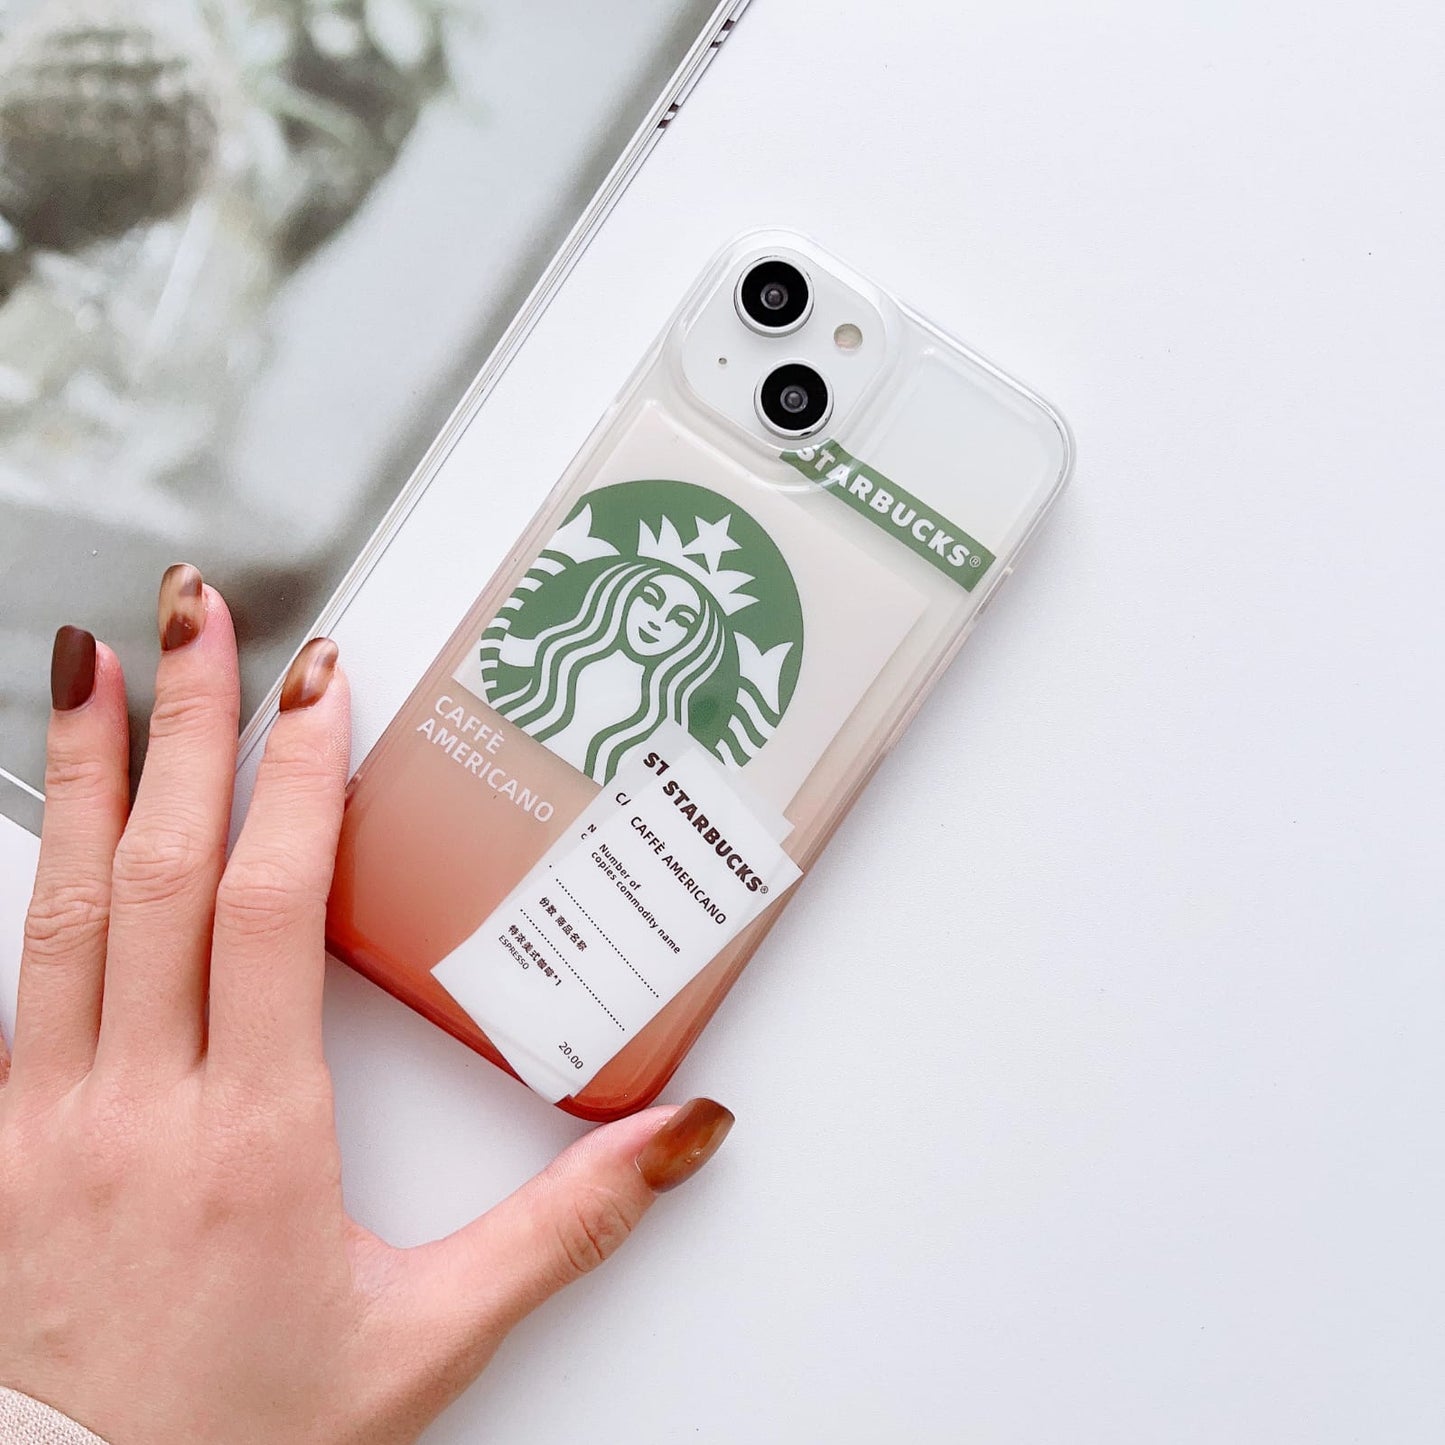 Starbucks Design Hybrid Design case - iPhone